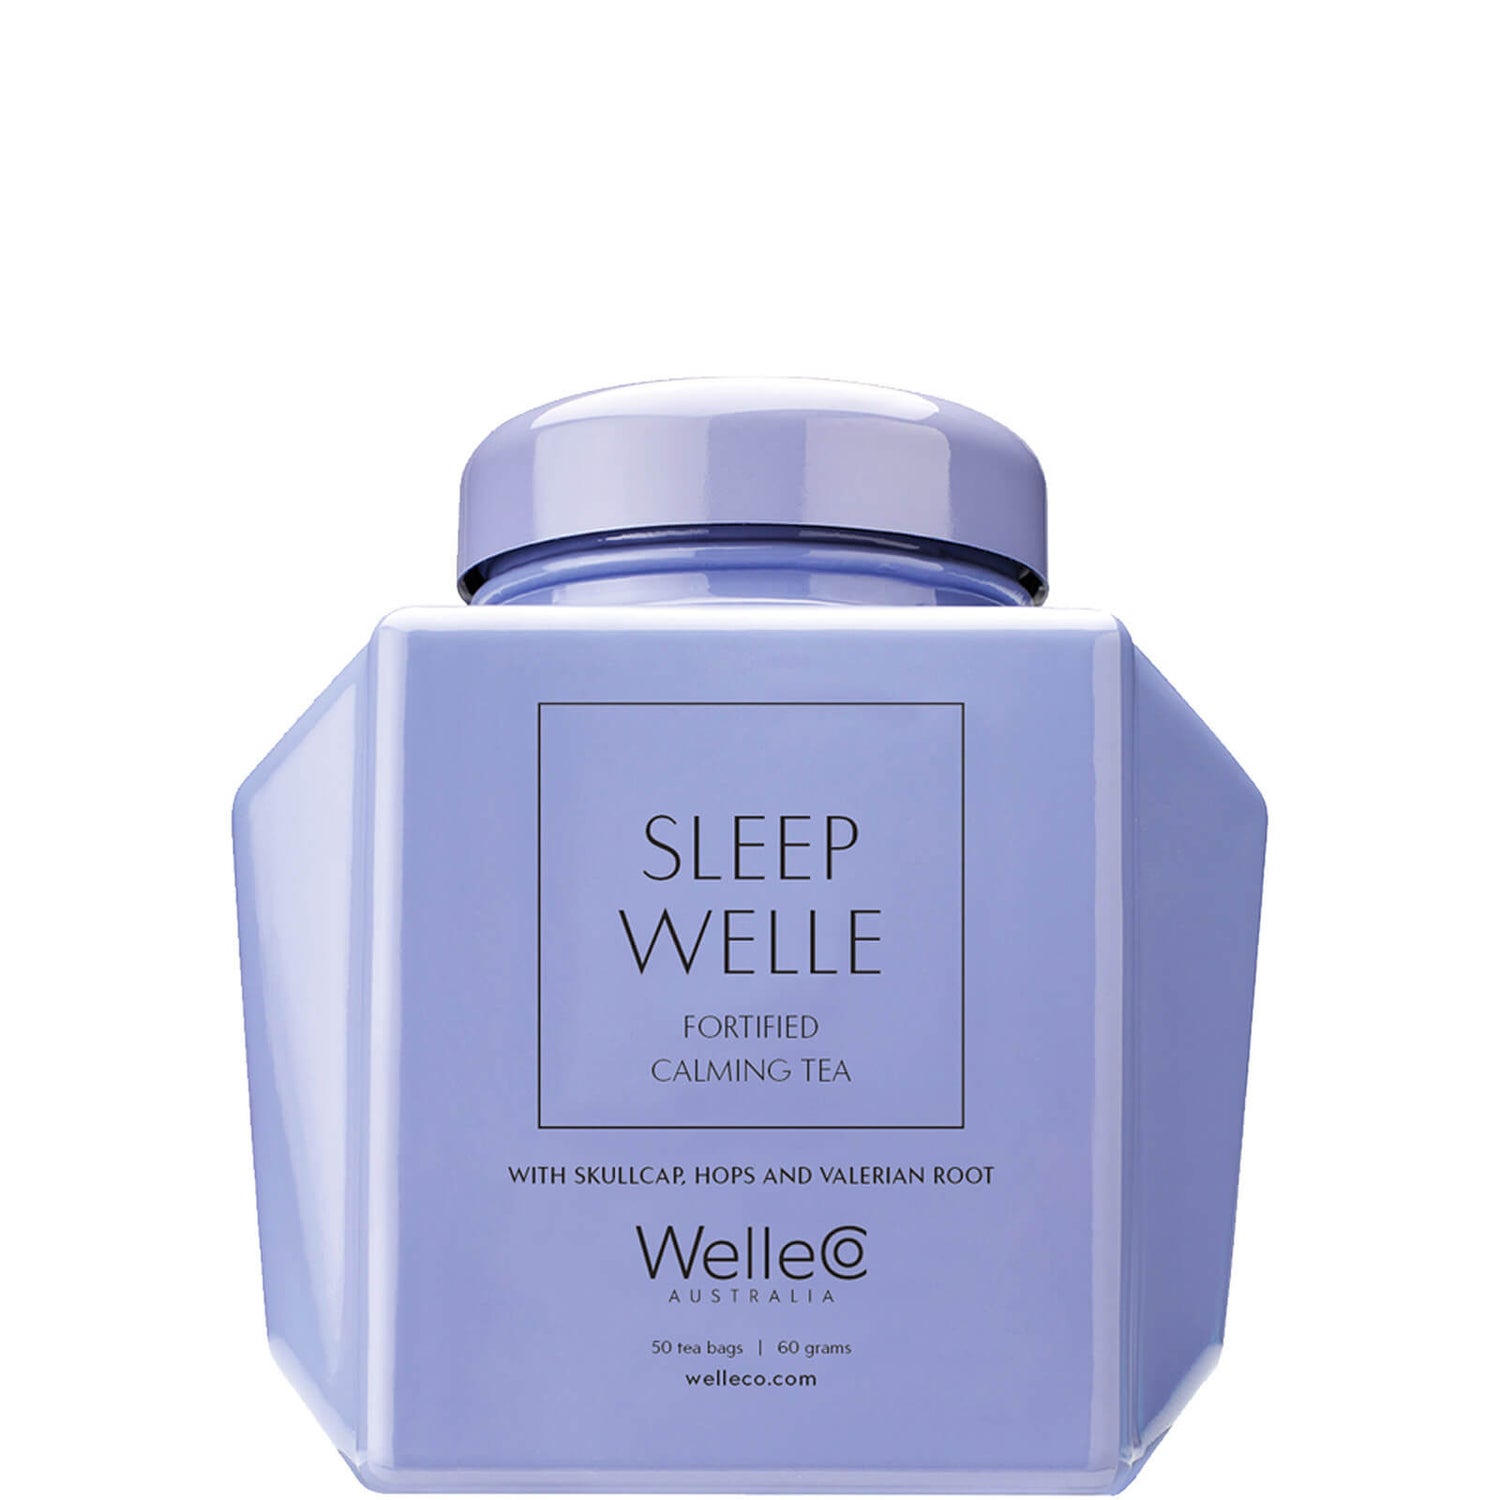 WelleCo Sleep Welle Fortified Calming Tea Caddy